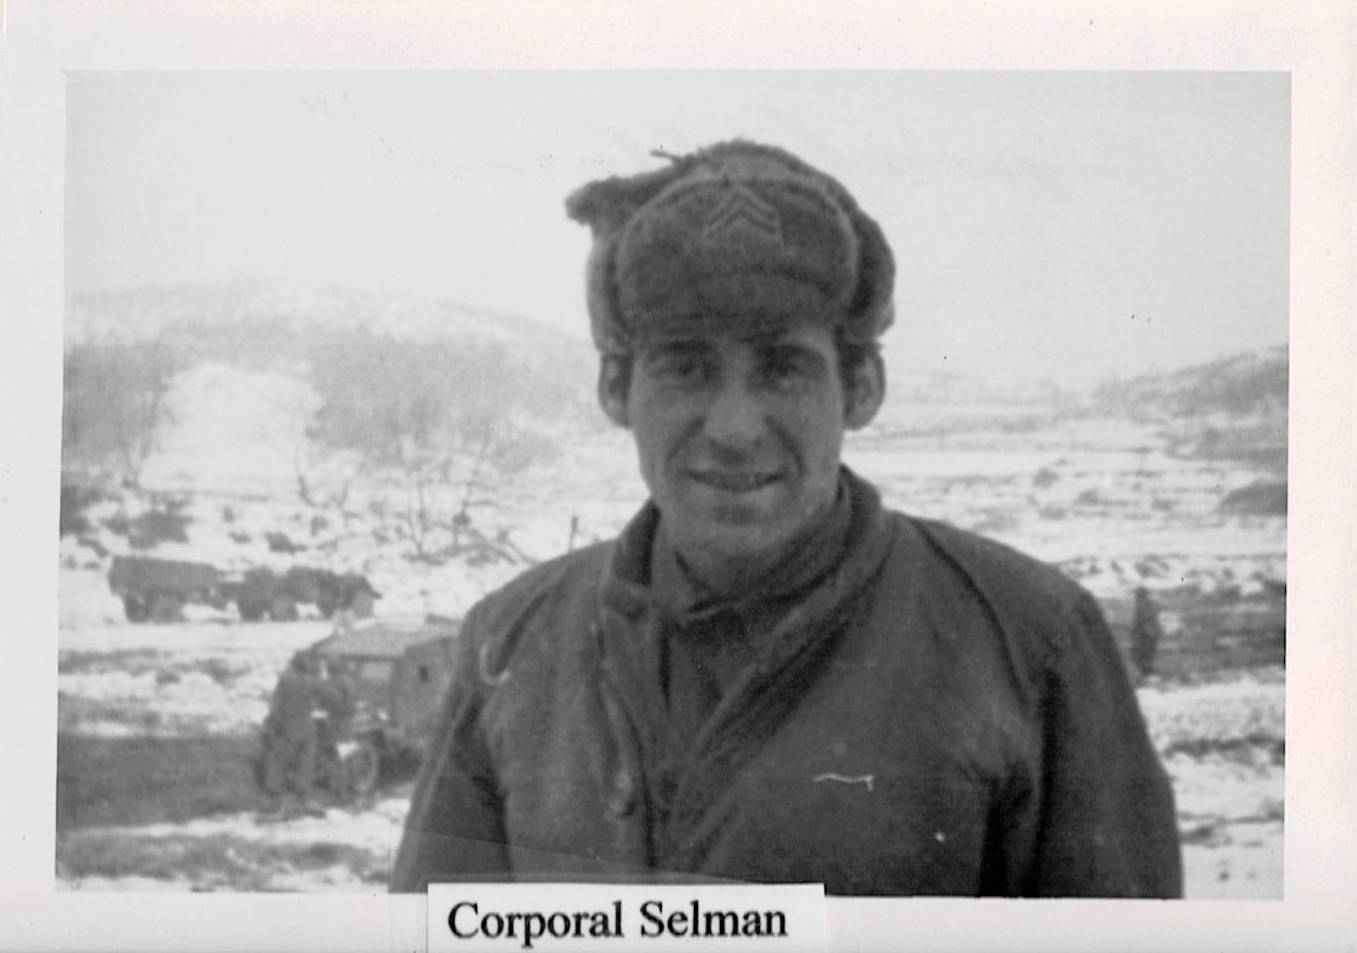 Corporal Selman